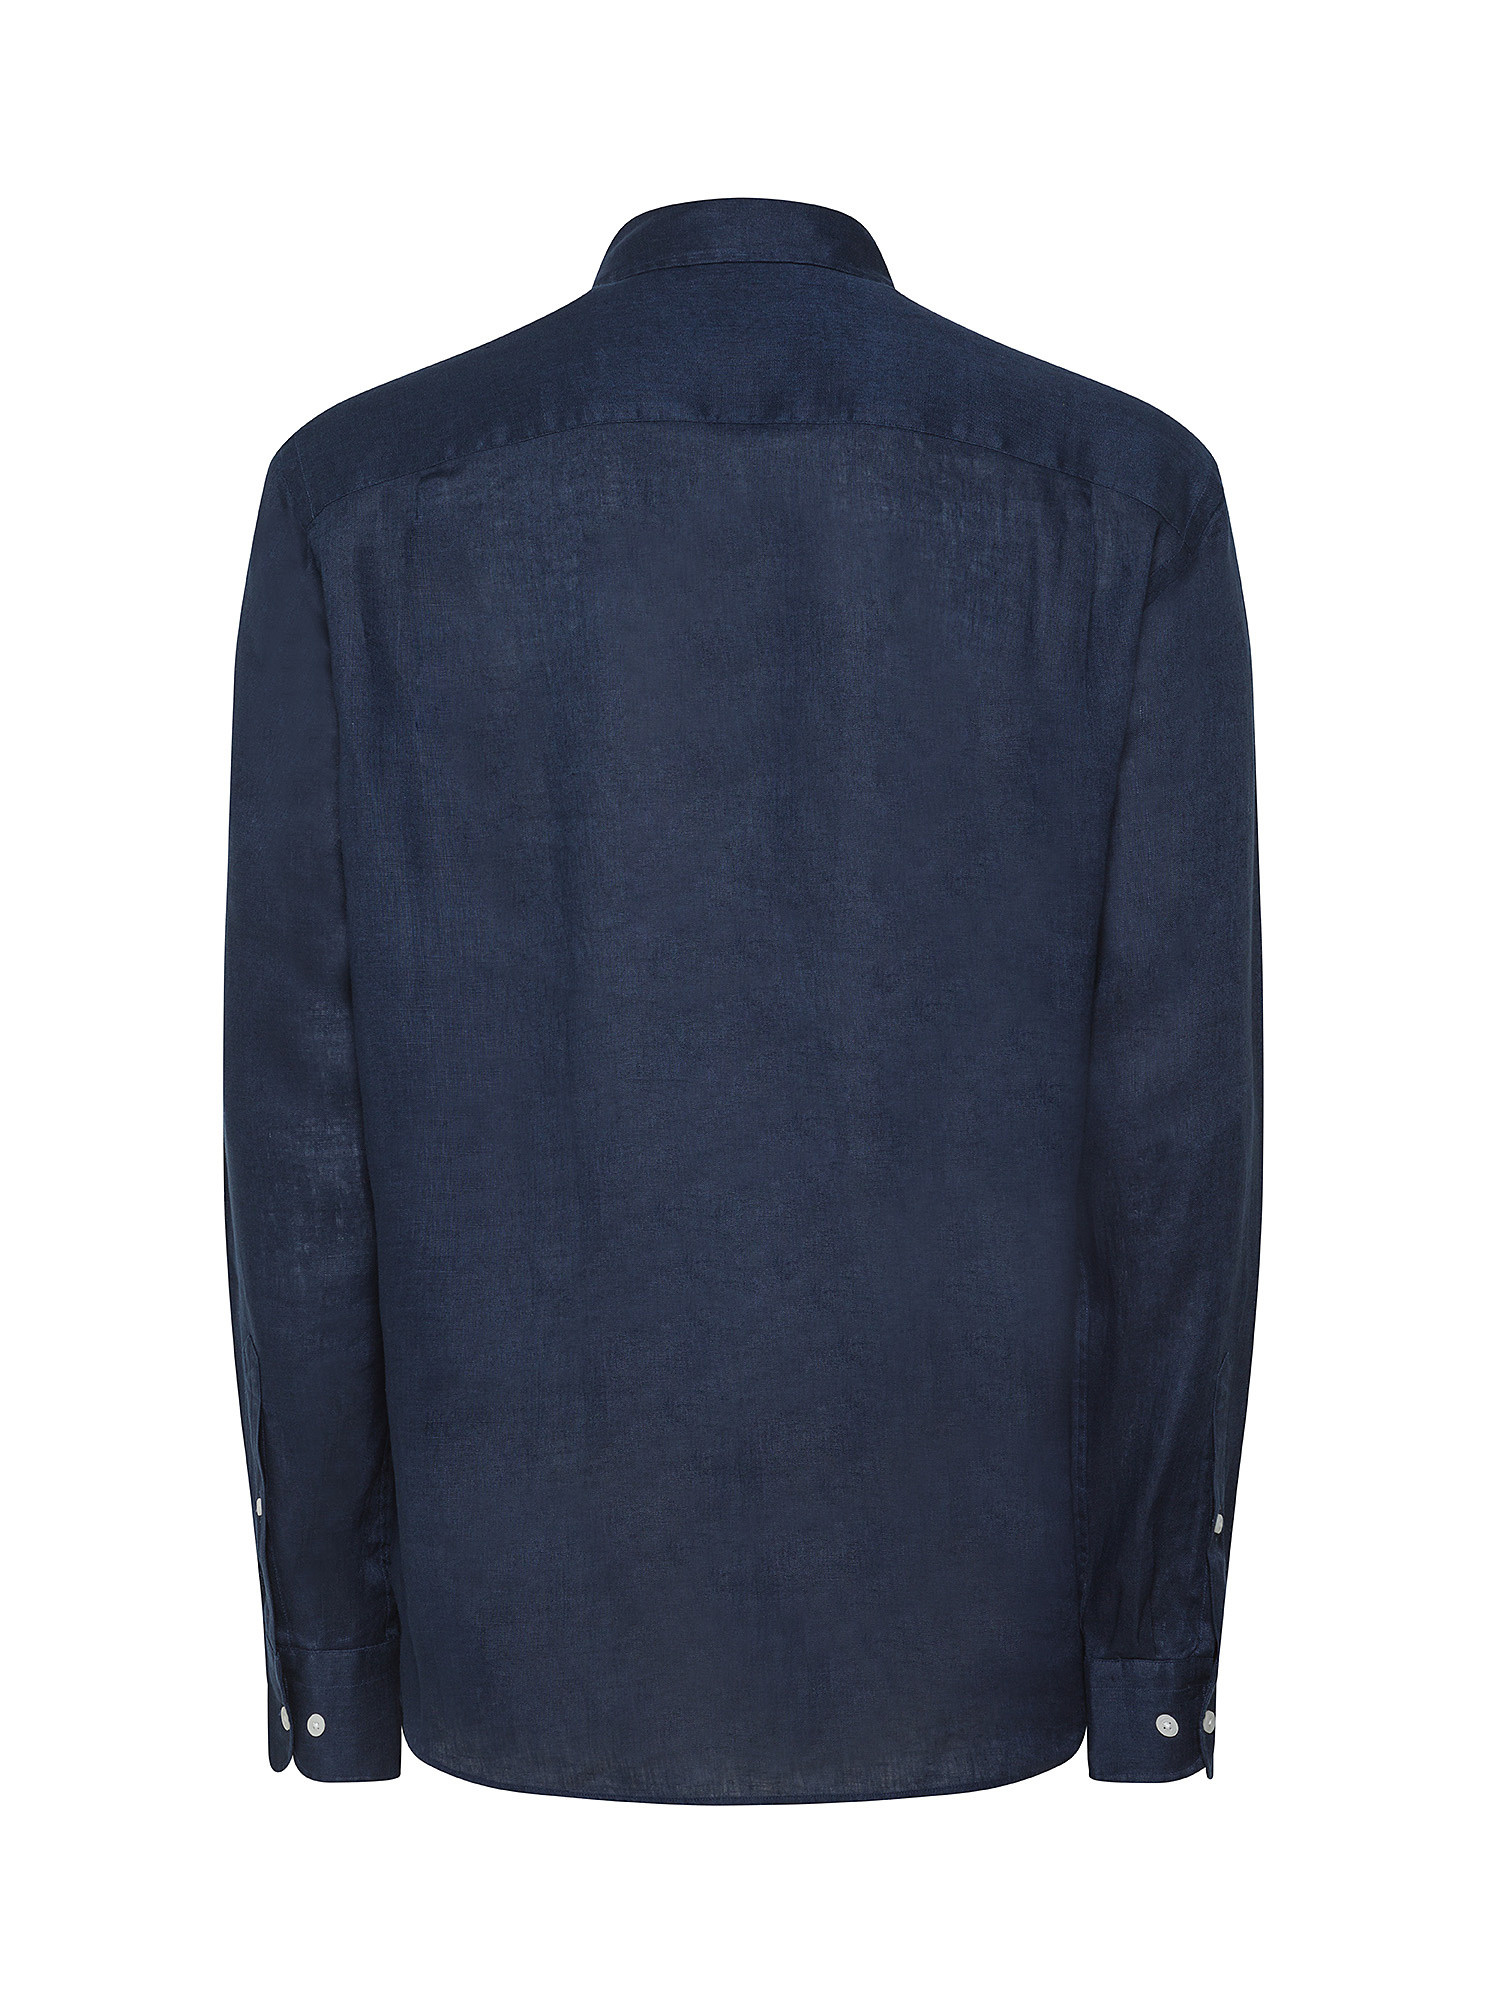 Luca D'Altieri - Regular fit shirt in pure linen, Blue, large image number 1